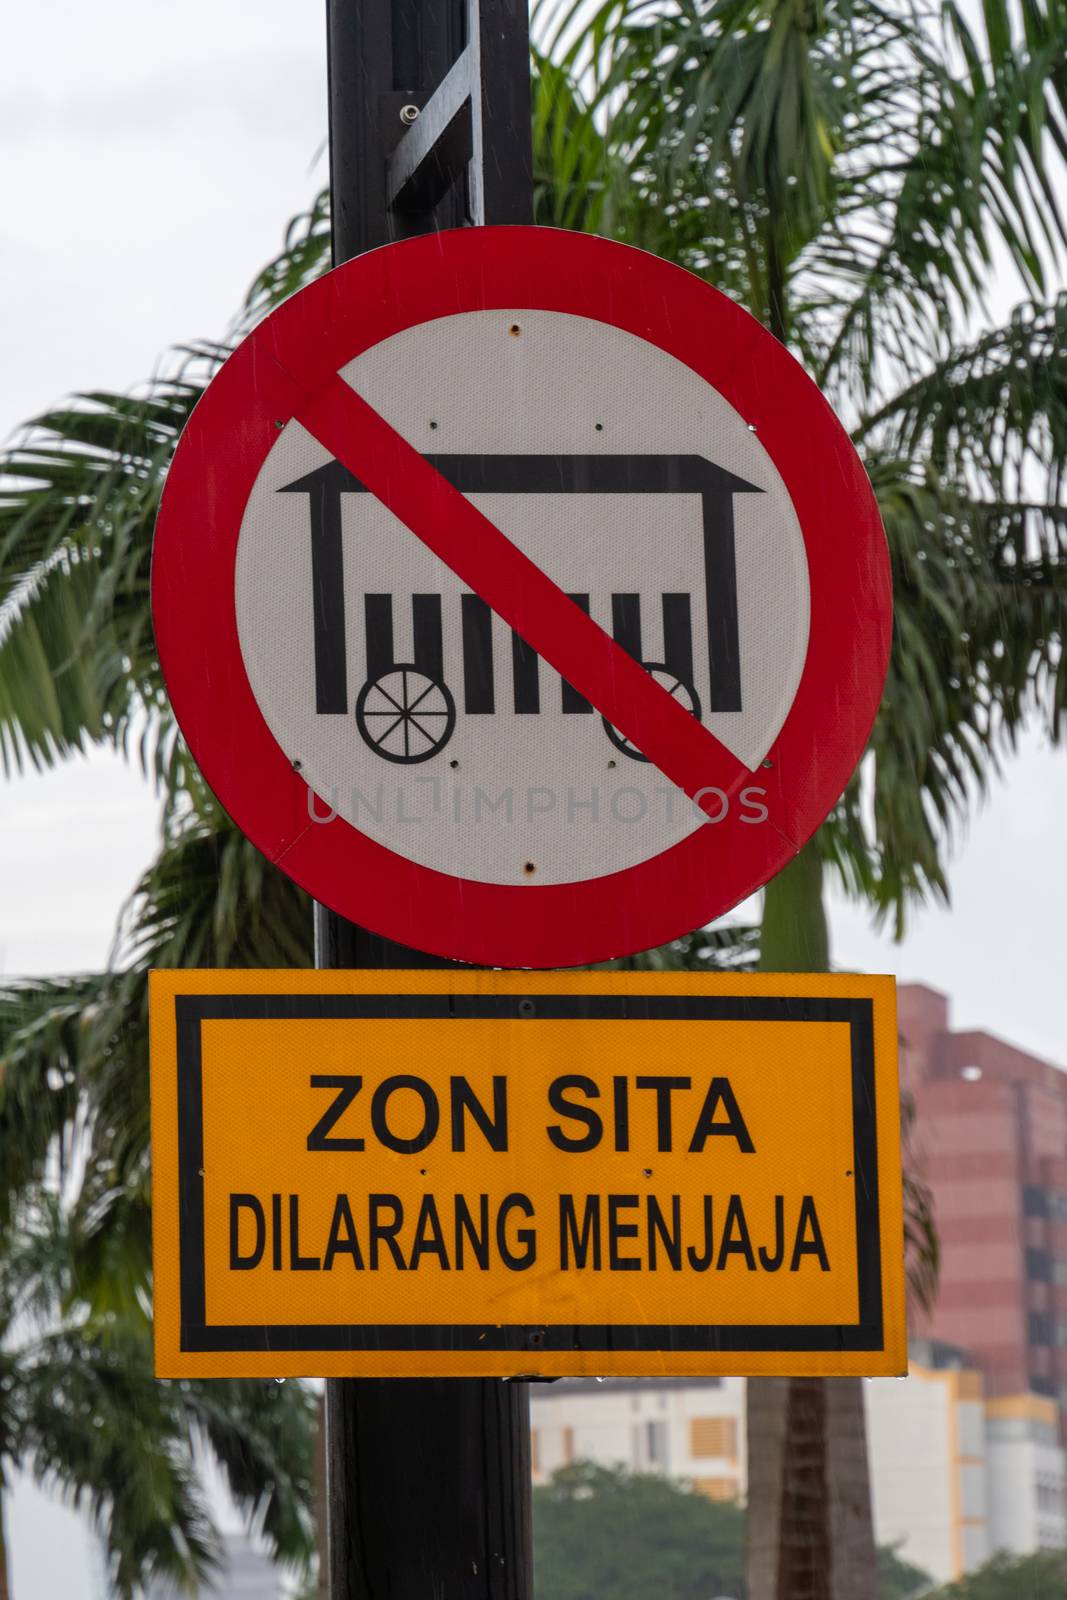 Street sign forbidding street food stands